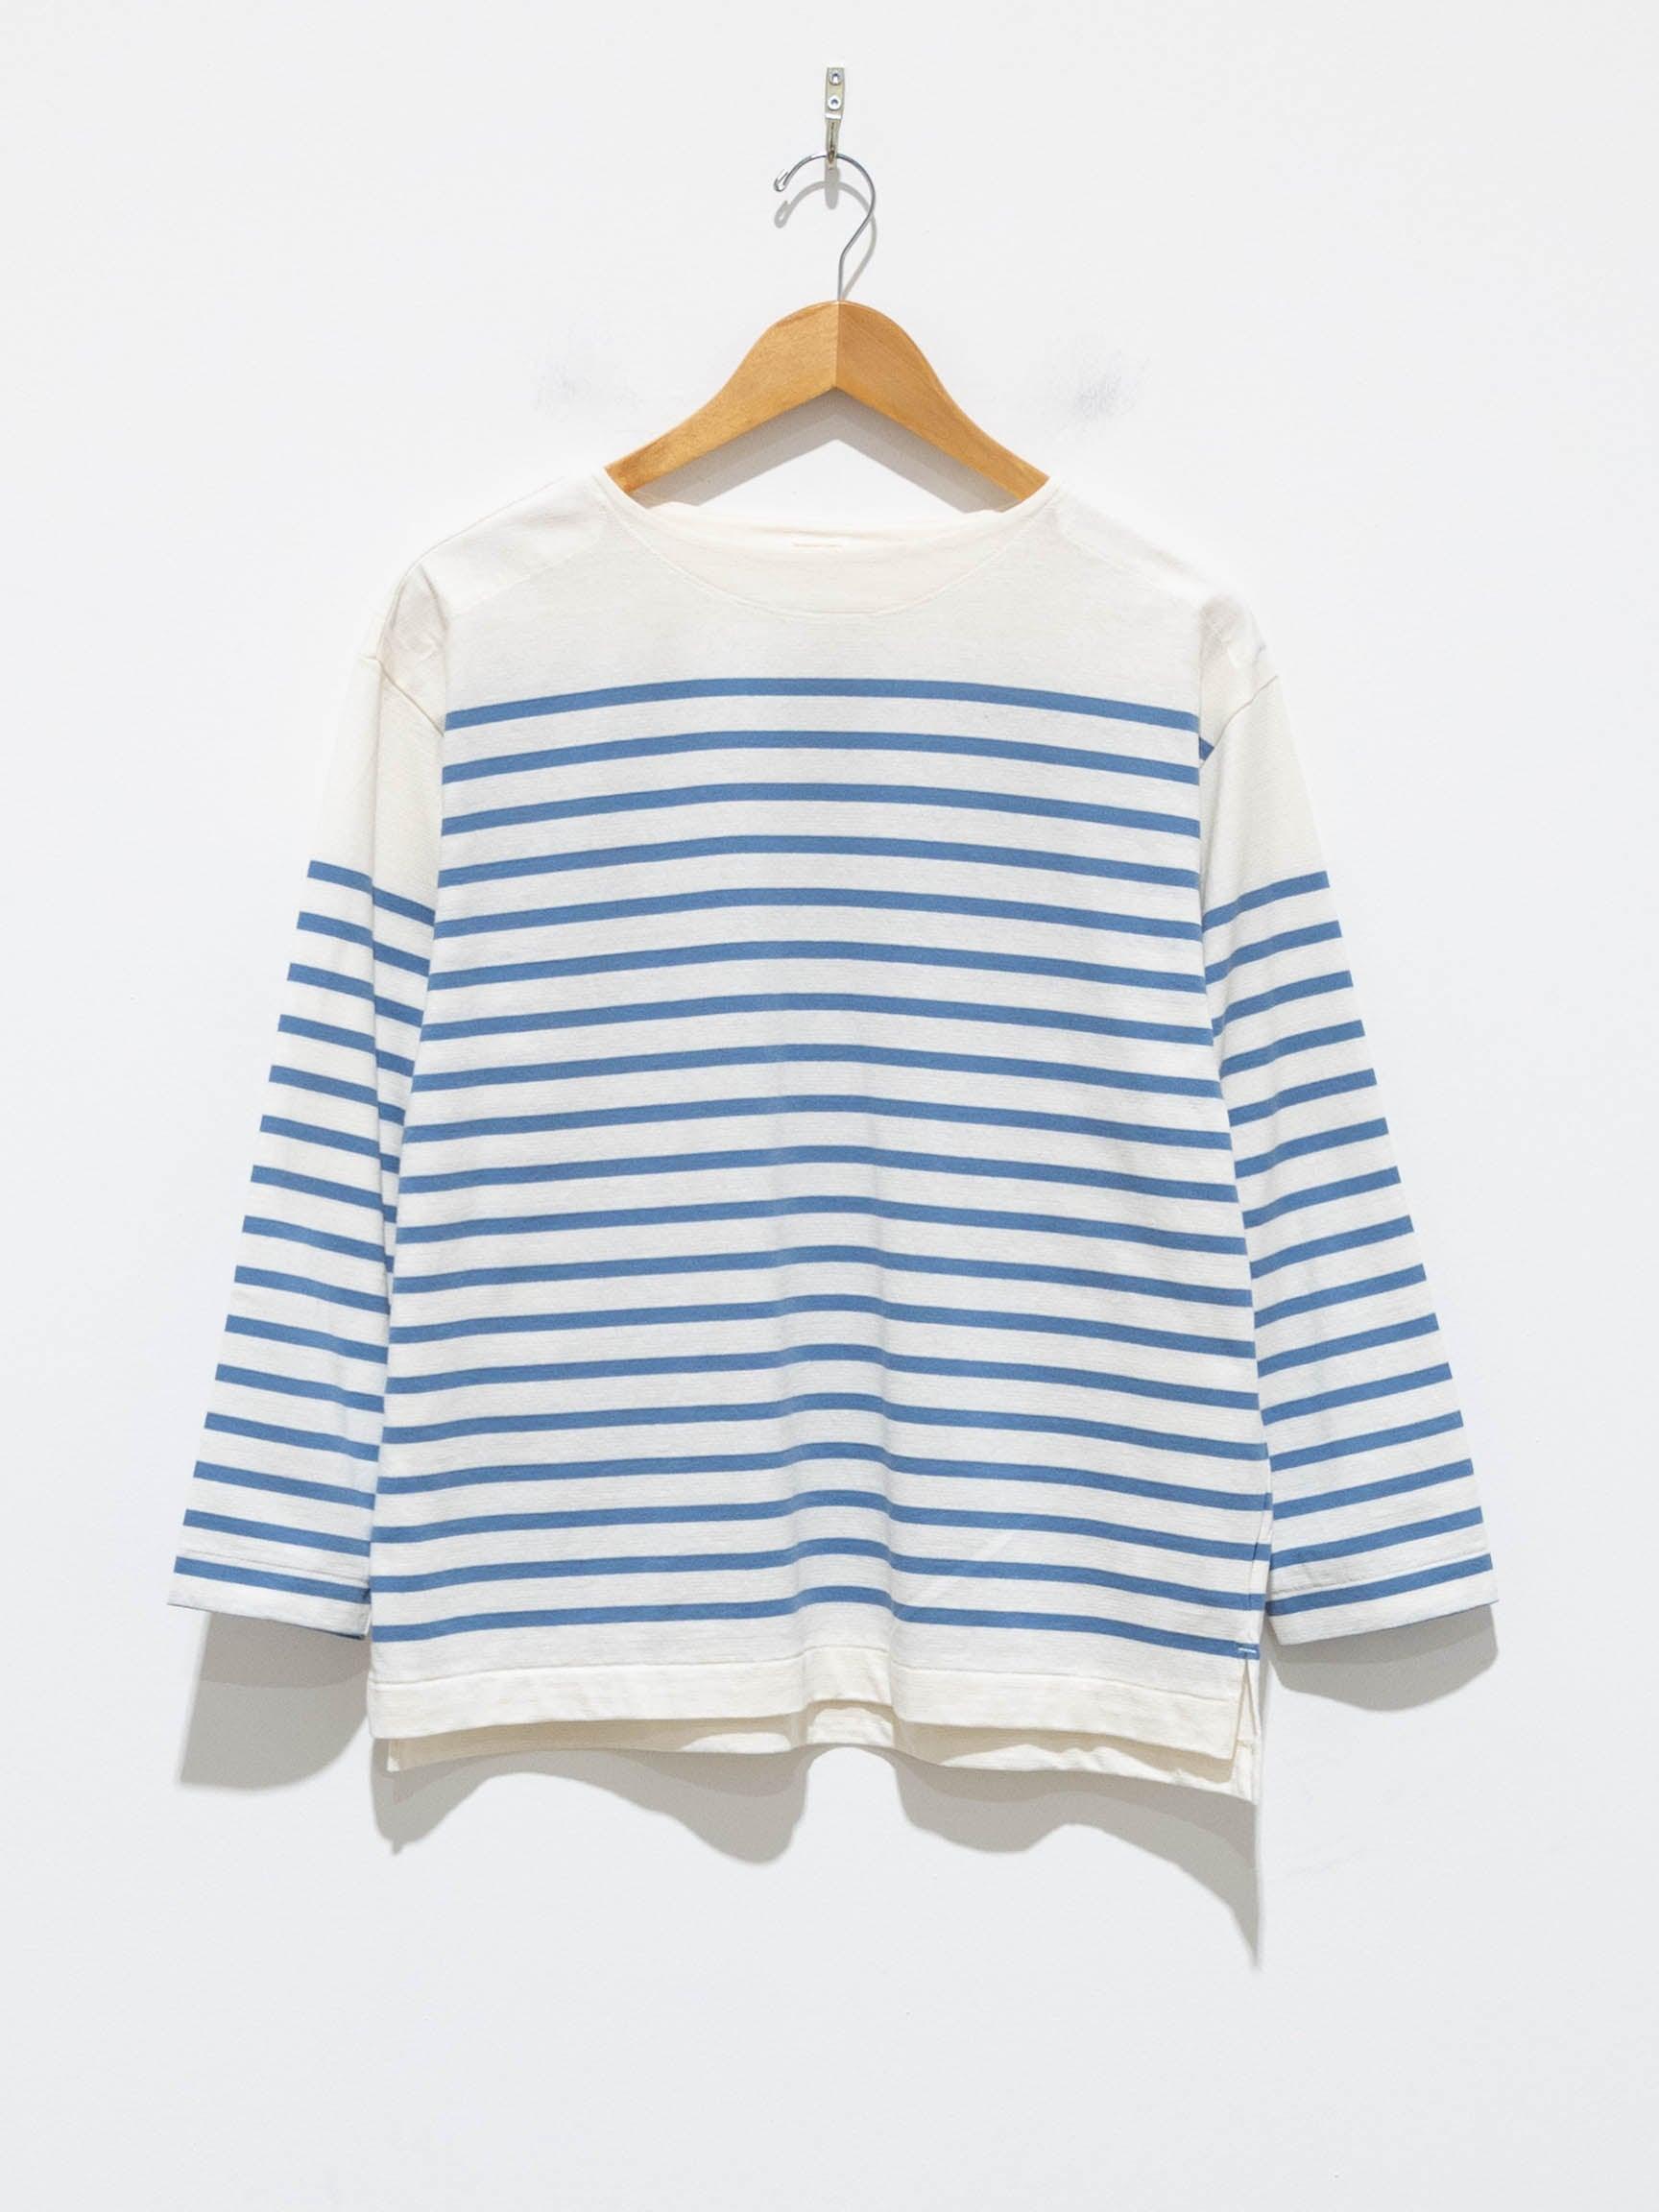 Namu Shop - Phlannel Washi Cotton Panel Border Basque Shirt - White/Pale Blue